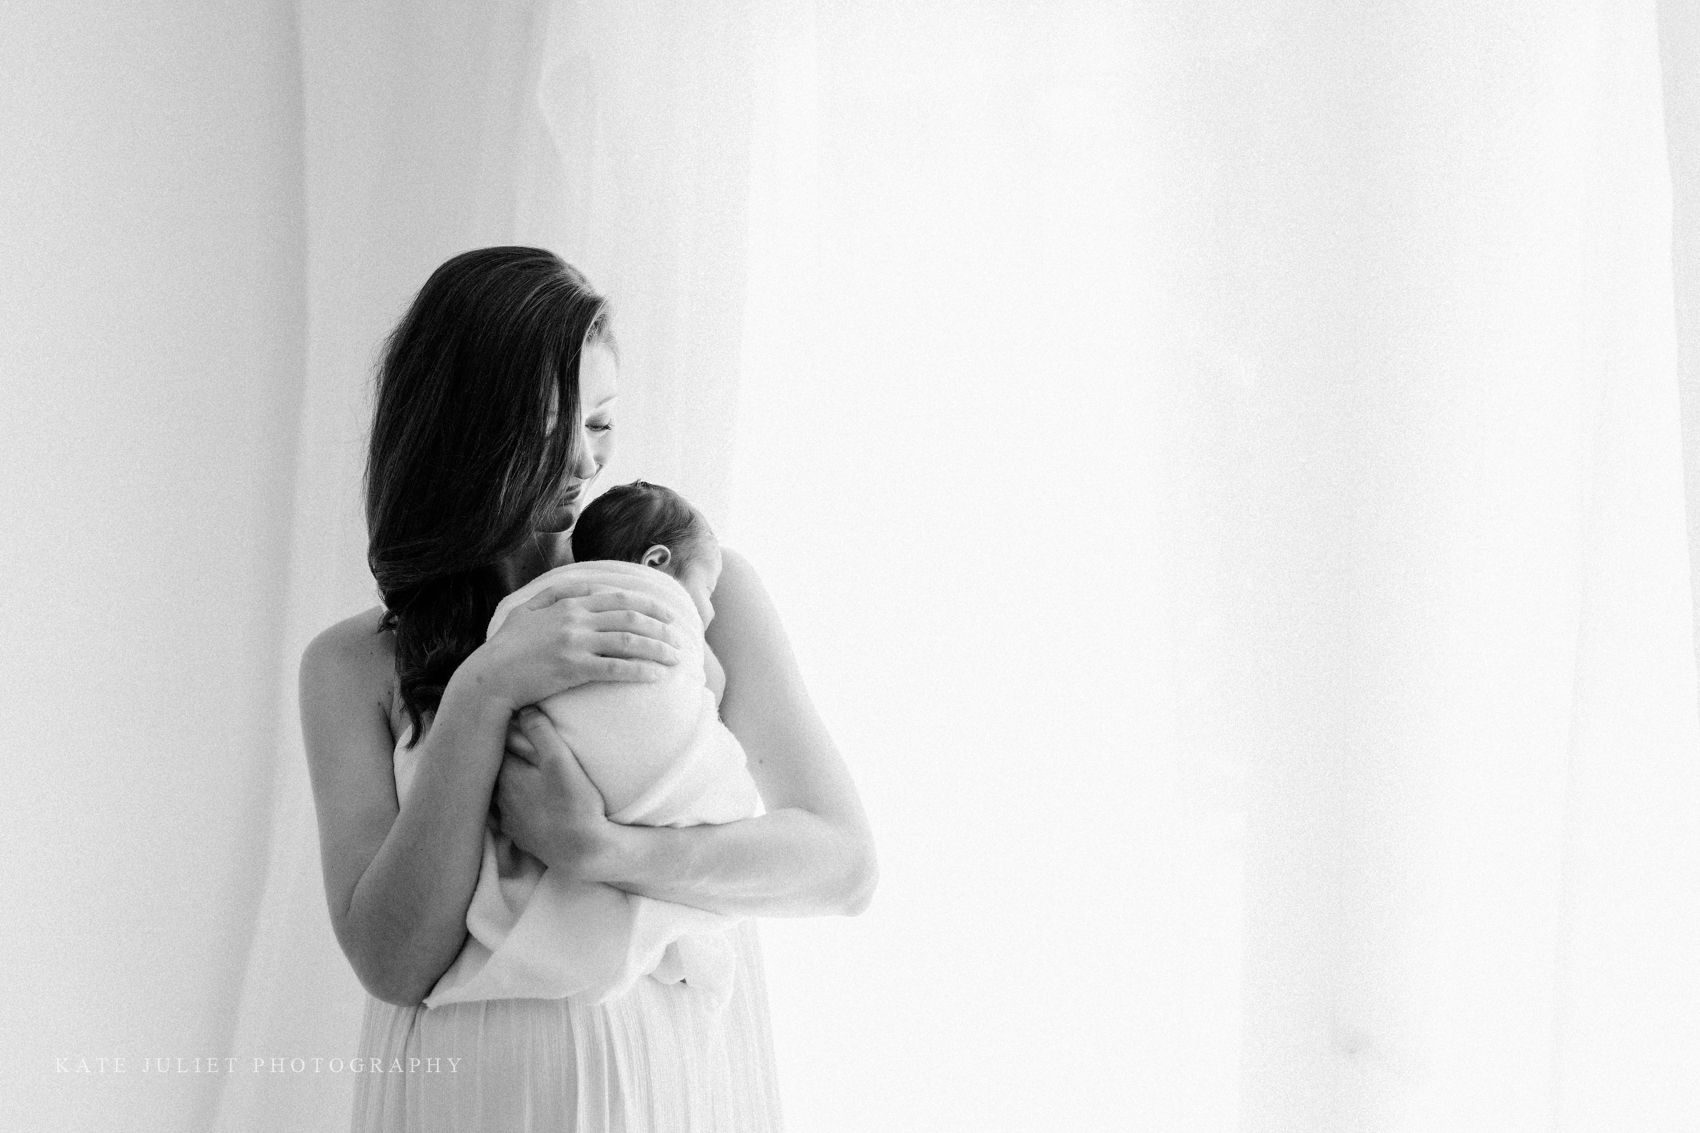 Fairfax VA Newborn Family Photographer | Kate Juliet Photography